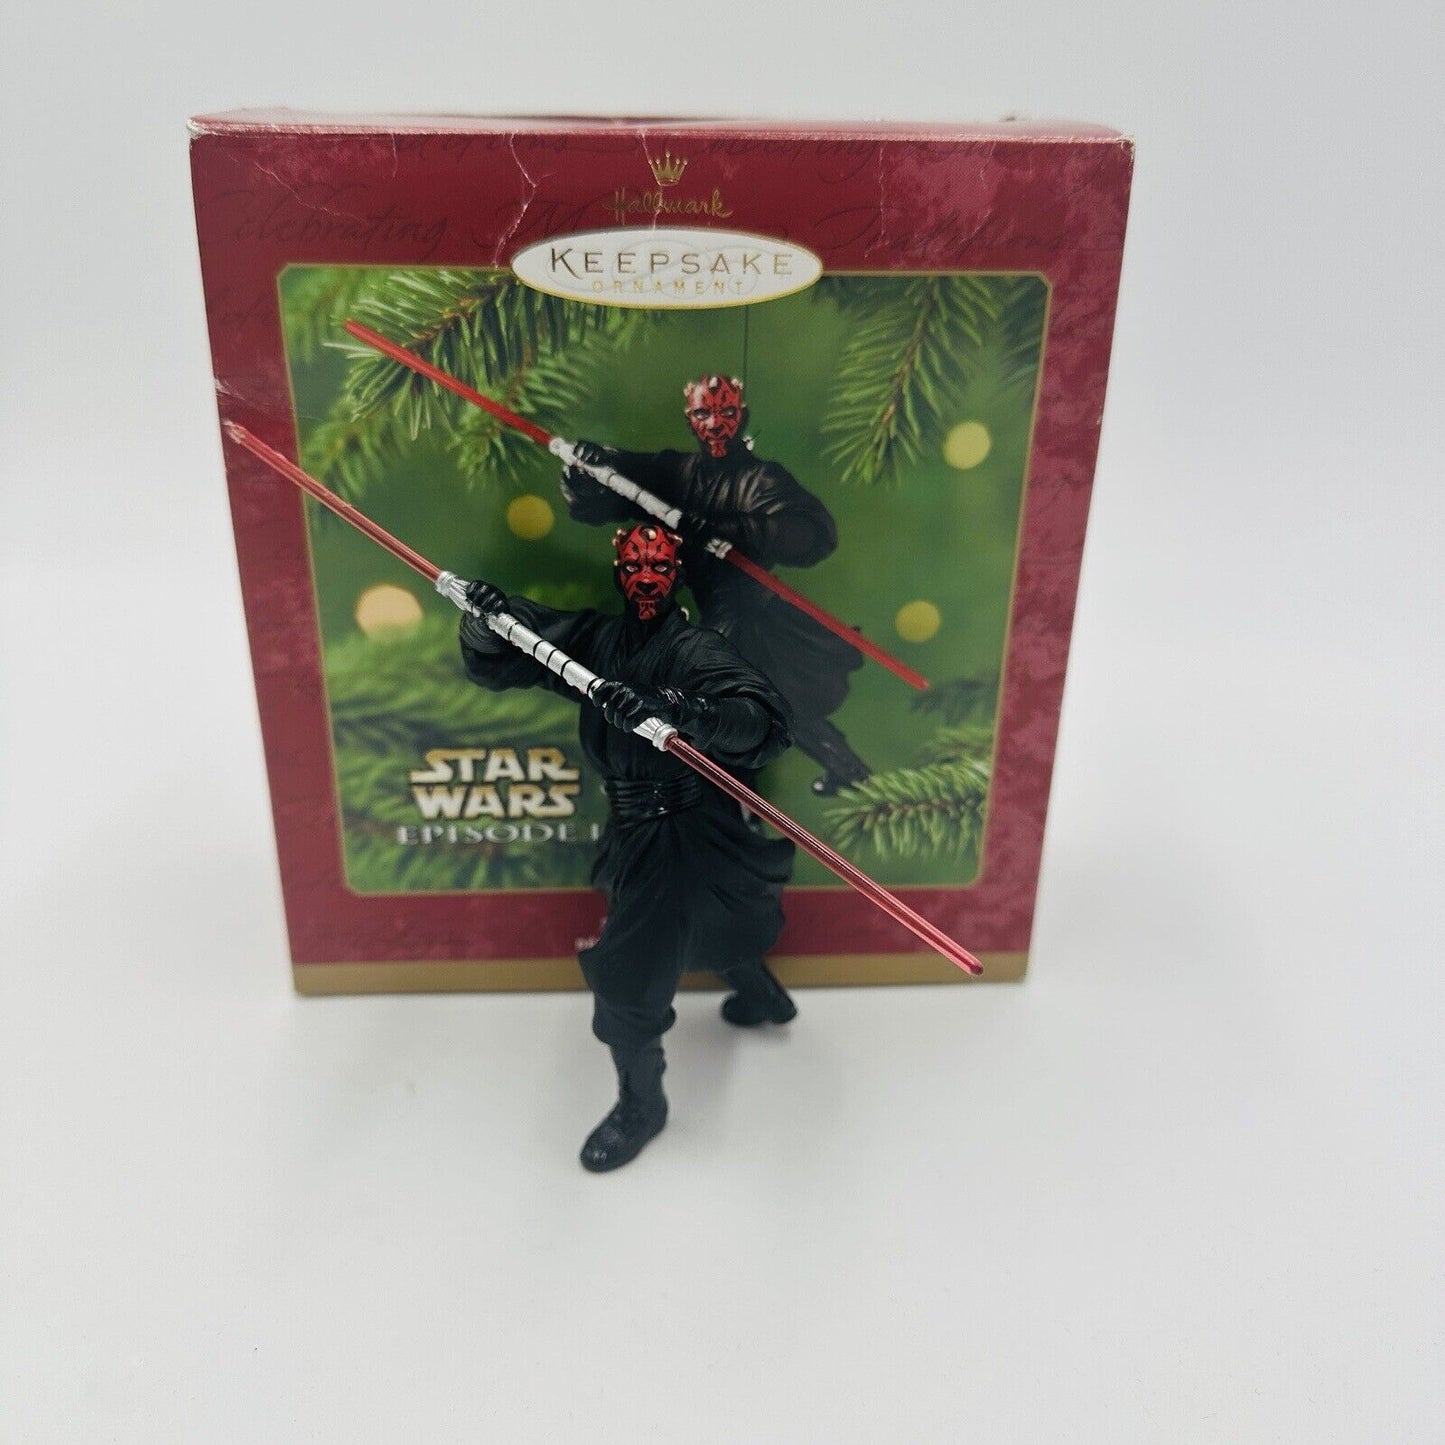 Hallmark Keepsake Ornament Star Wars Episode 1 Darth Maul 2000 Figurine Holiday